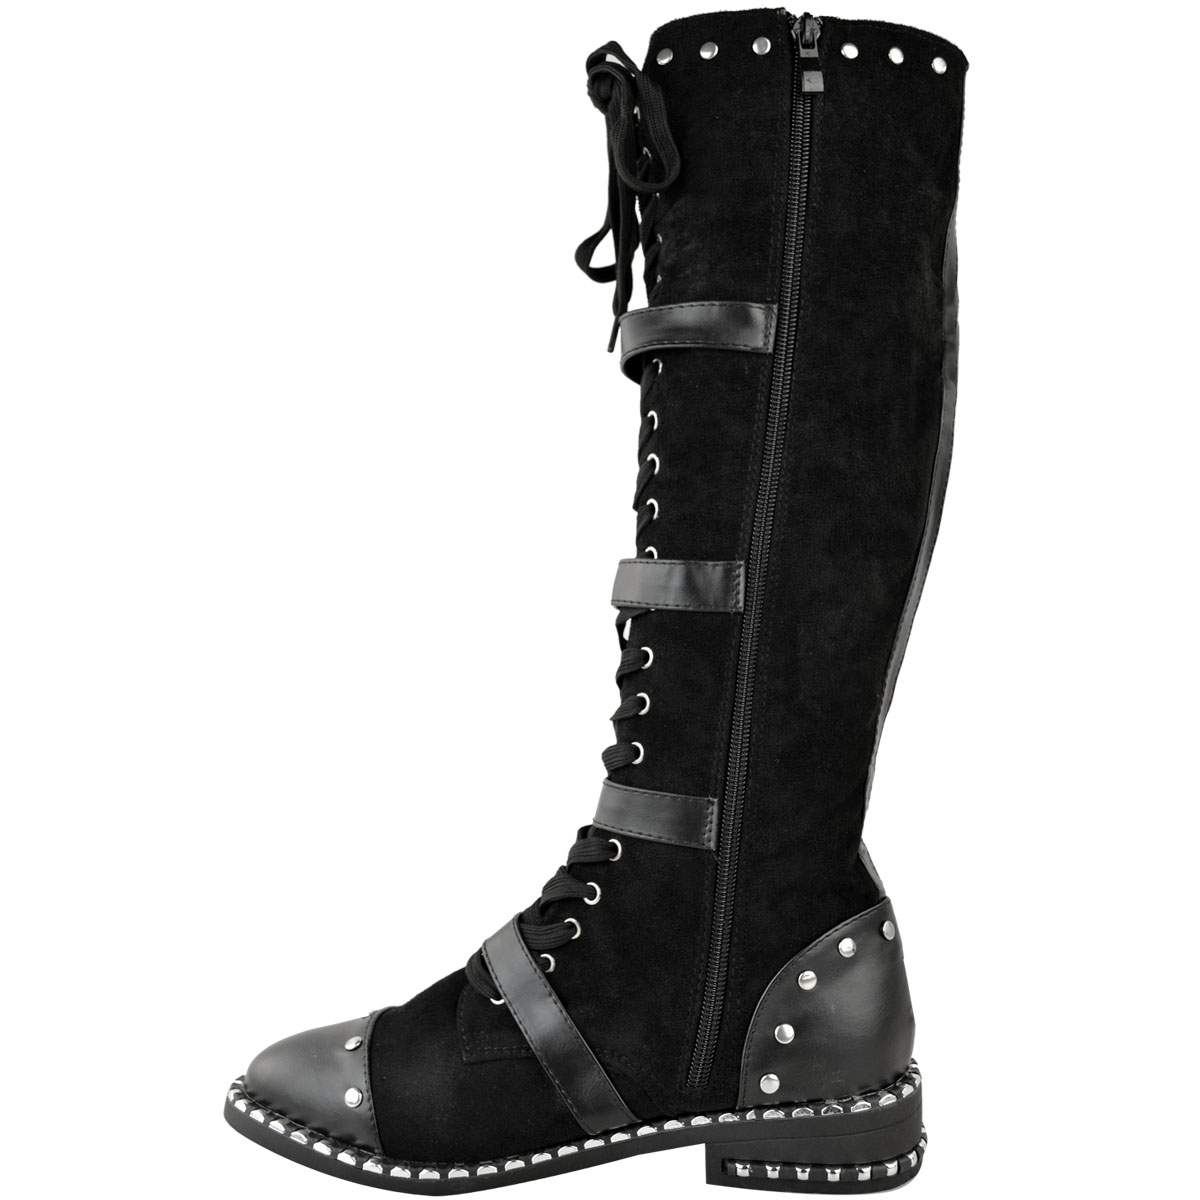 Womens Ladies Knee High Boots Studded Punk Grunge Rock Spikey Winter Calf Shoes